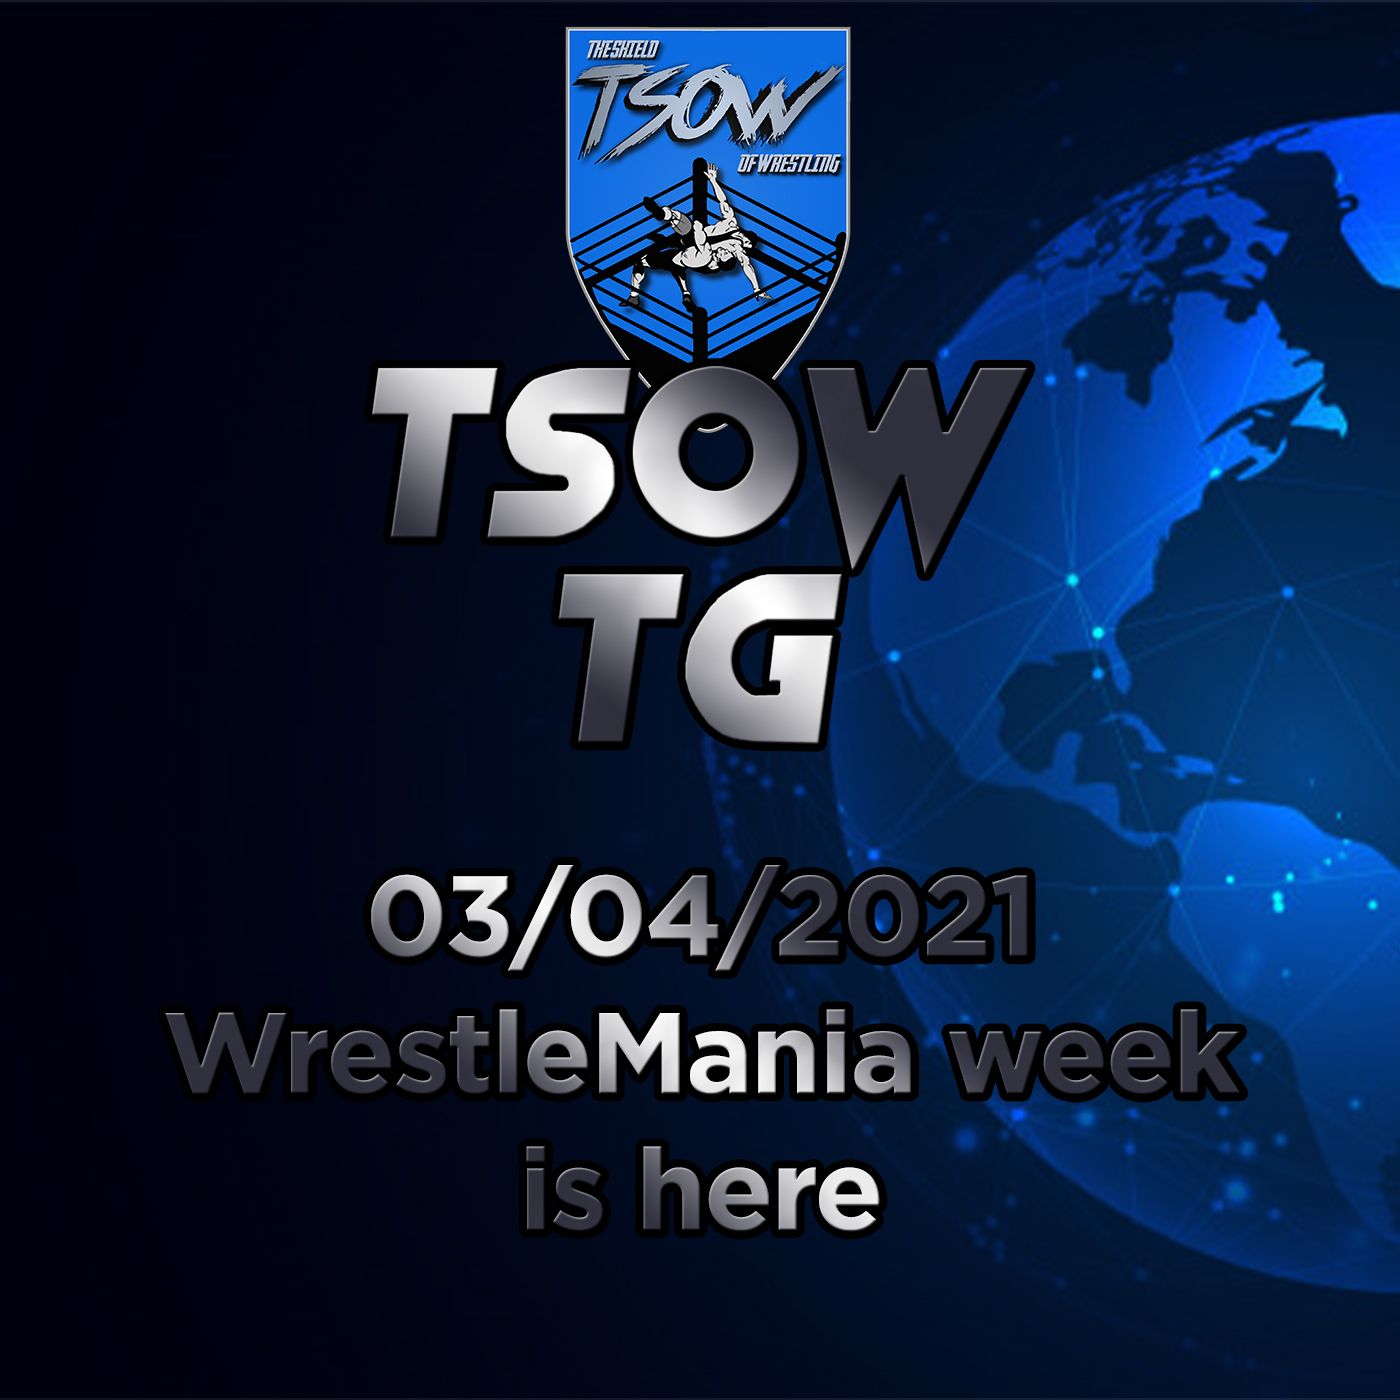 TSOW TG 03/04/21 - Wrestlemania week is here!